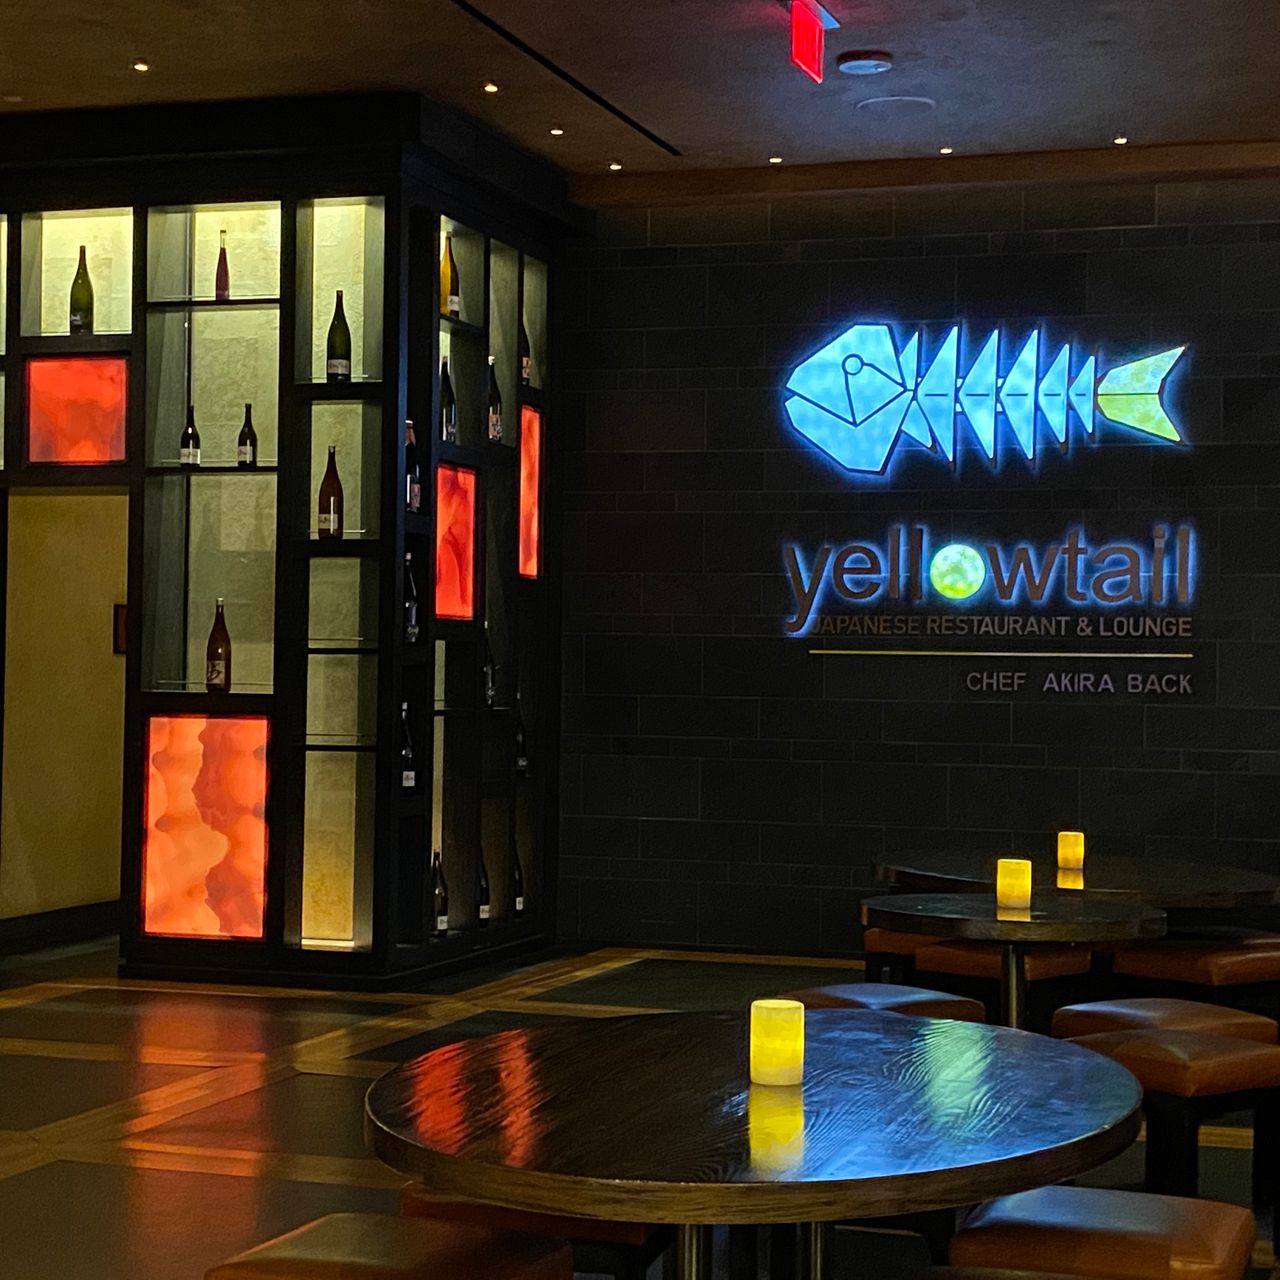 yellowtail japanese restaurant & lounge